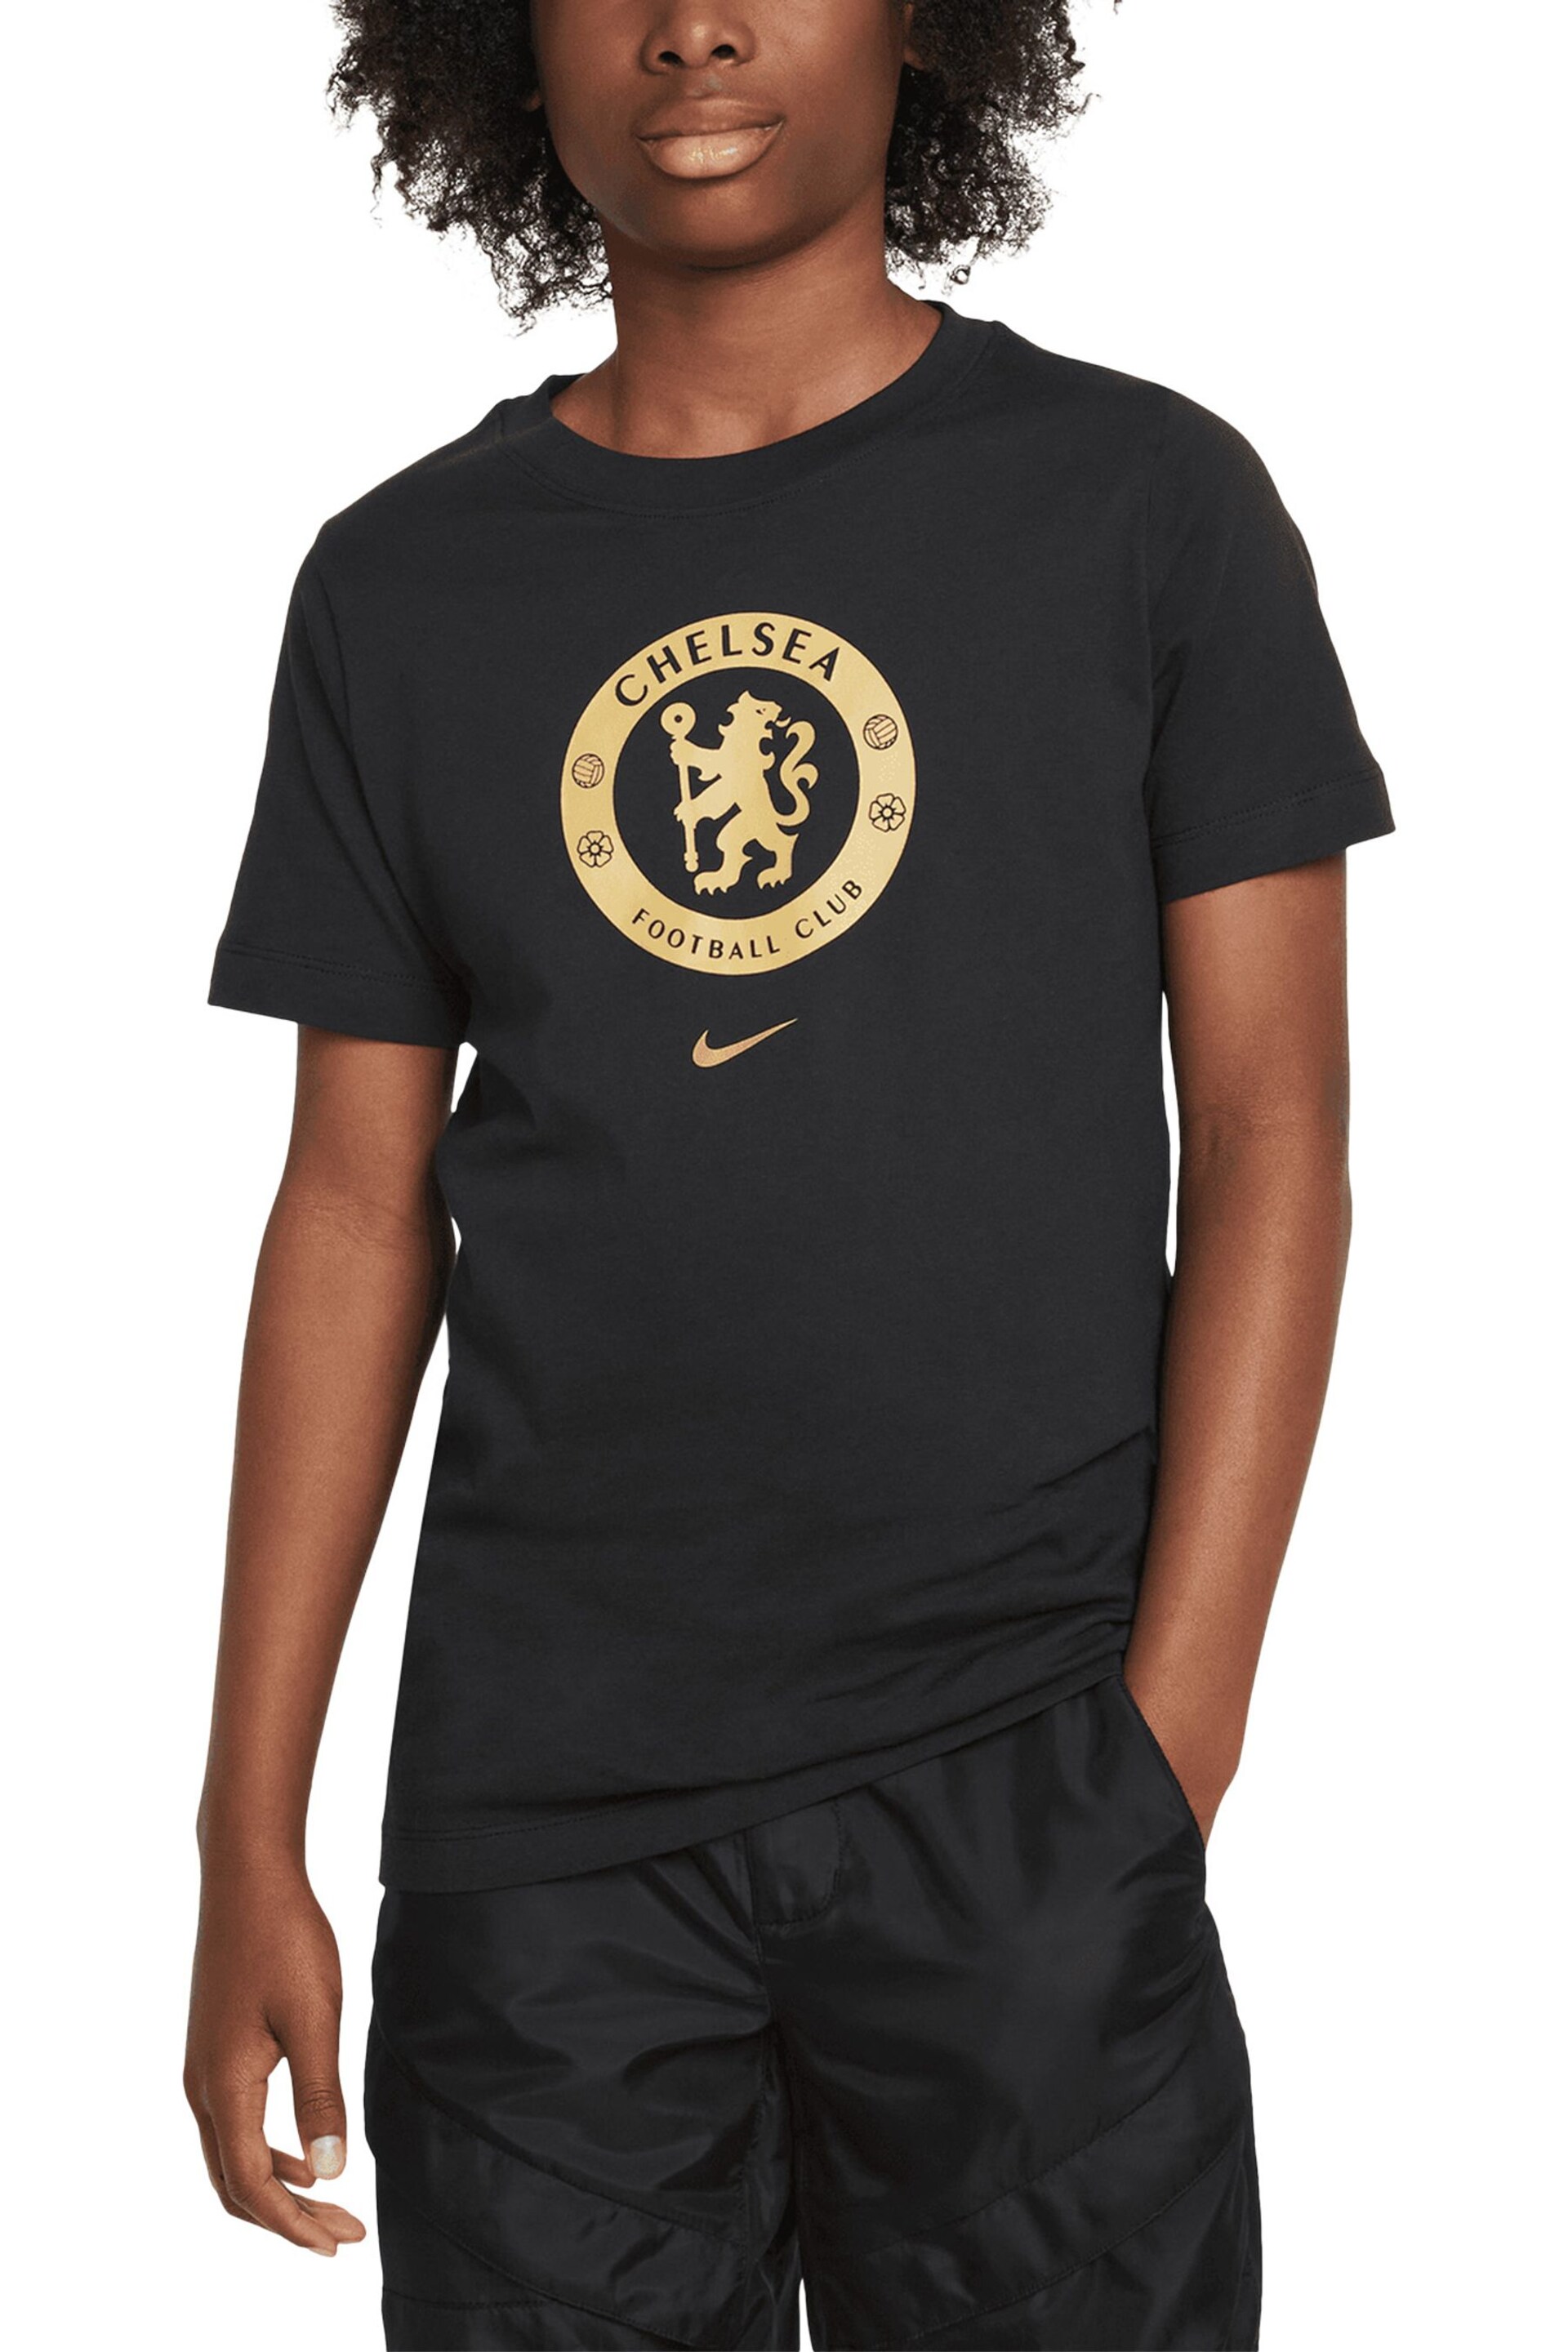 Nike Black Chelsea Crest T-Shirt Kids - Image 1 of 2